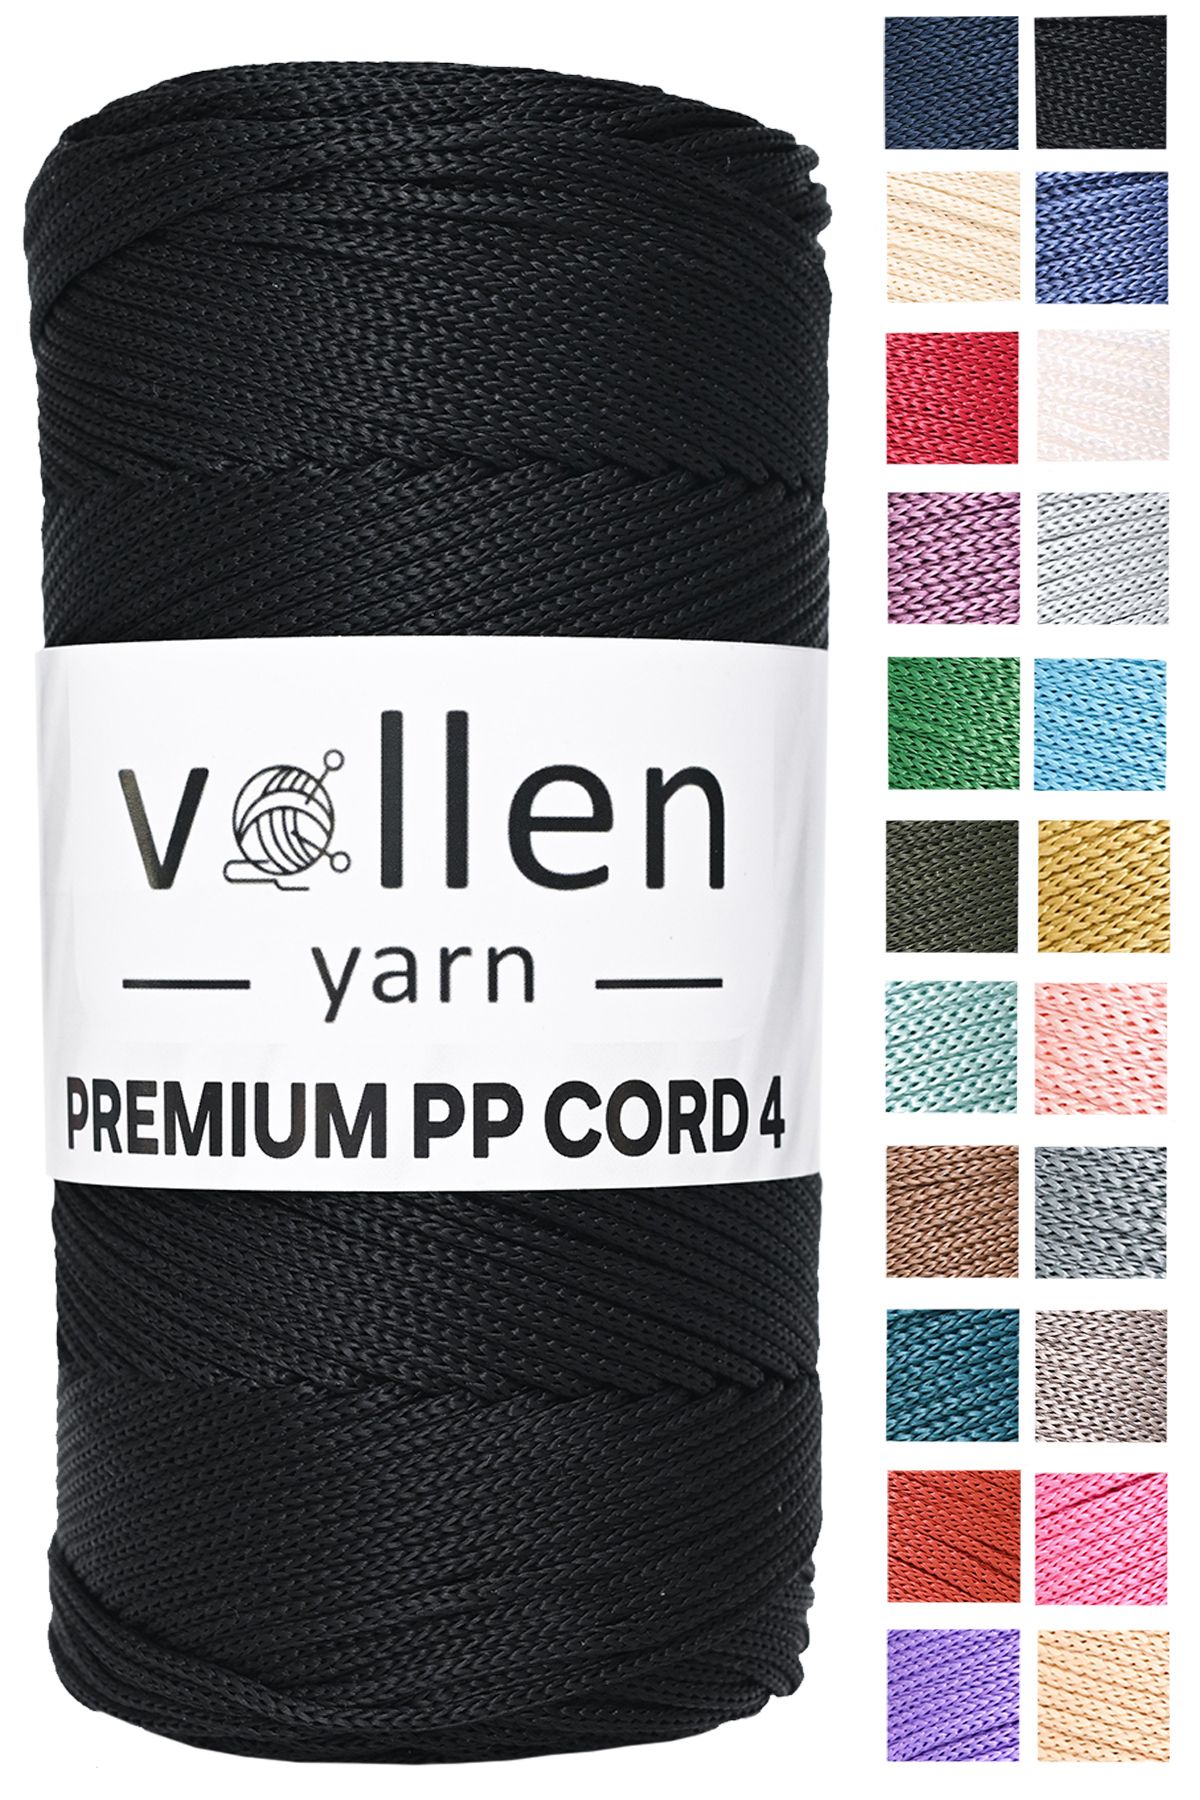 vollen yarn 200gr/230m Premium Polyester Makrome Ipi 2mm ,makrome Ip,makrame,supla,çanta Ipi,siyah